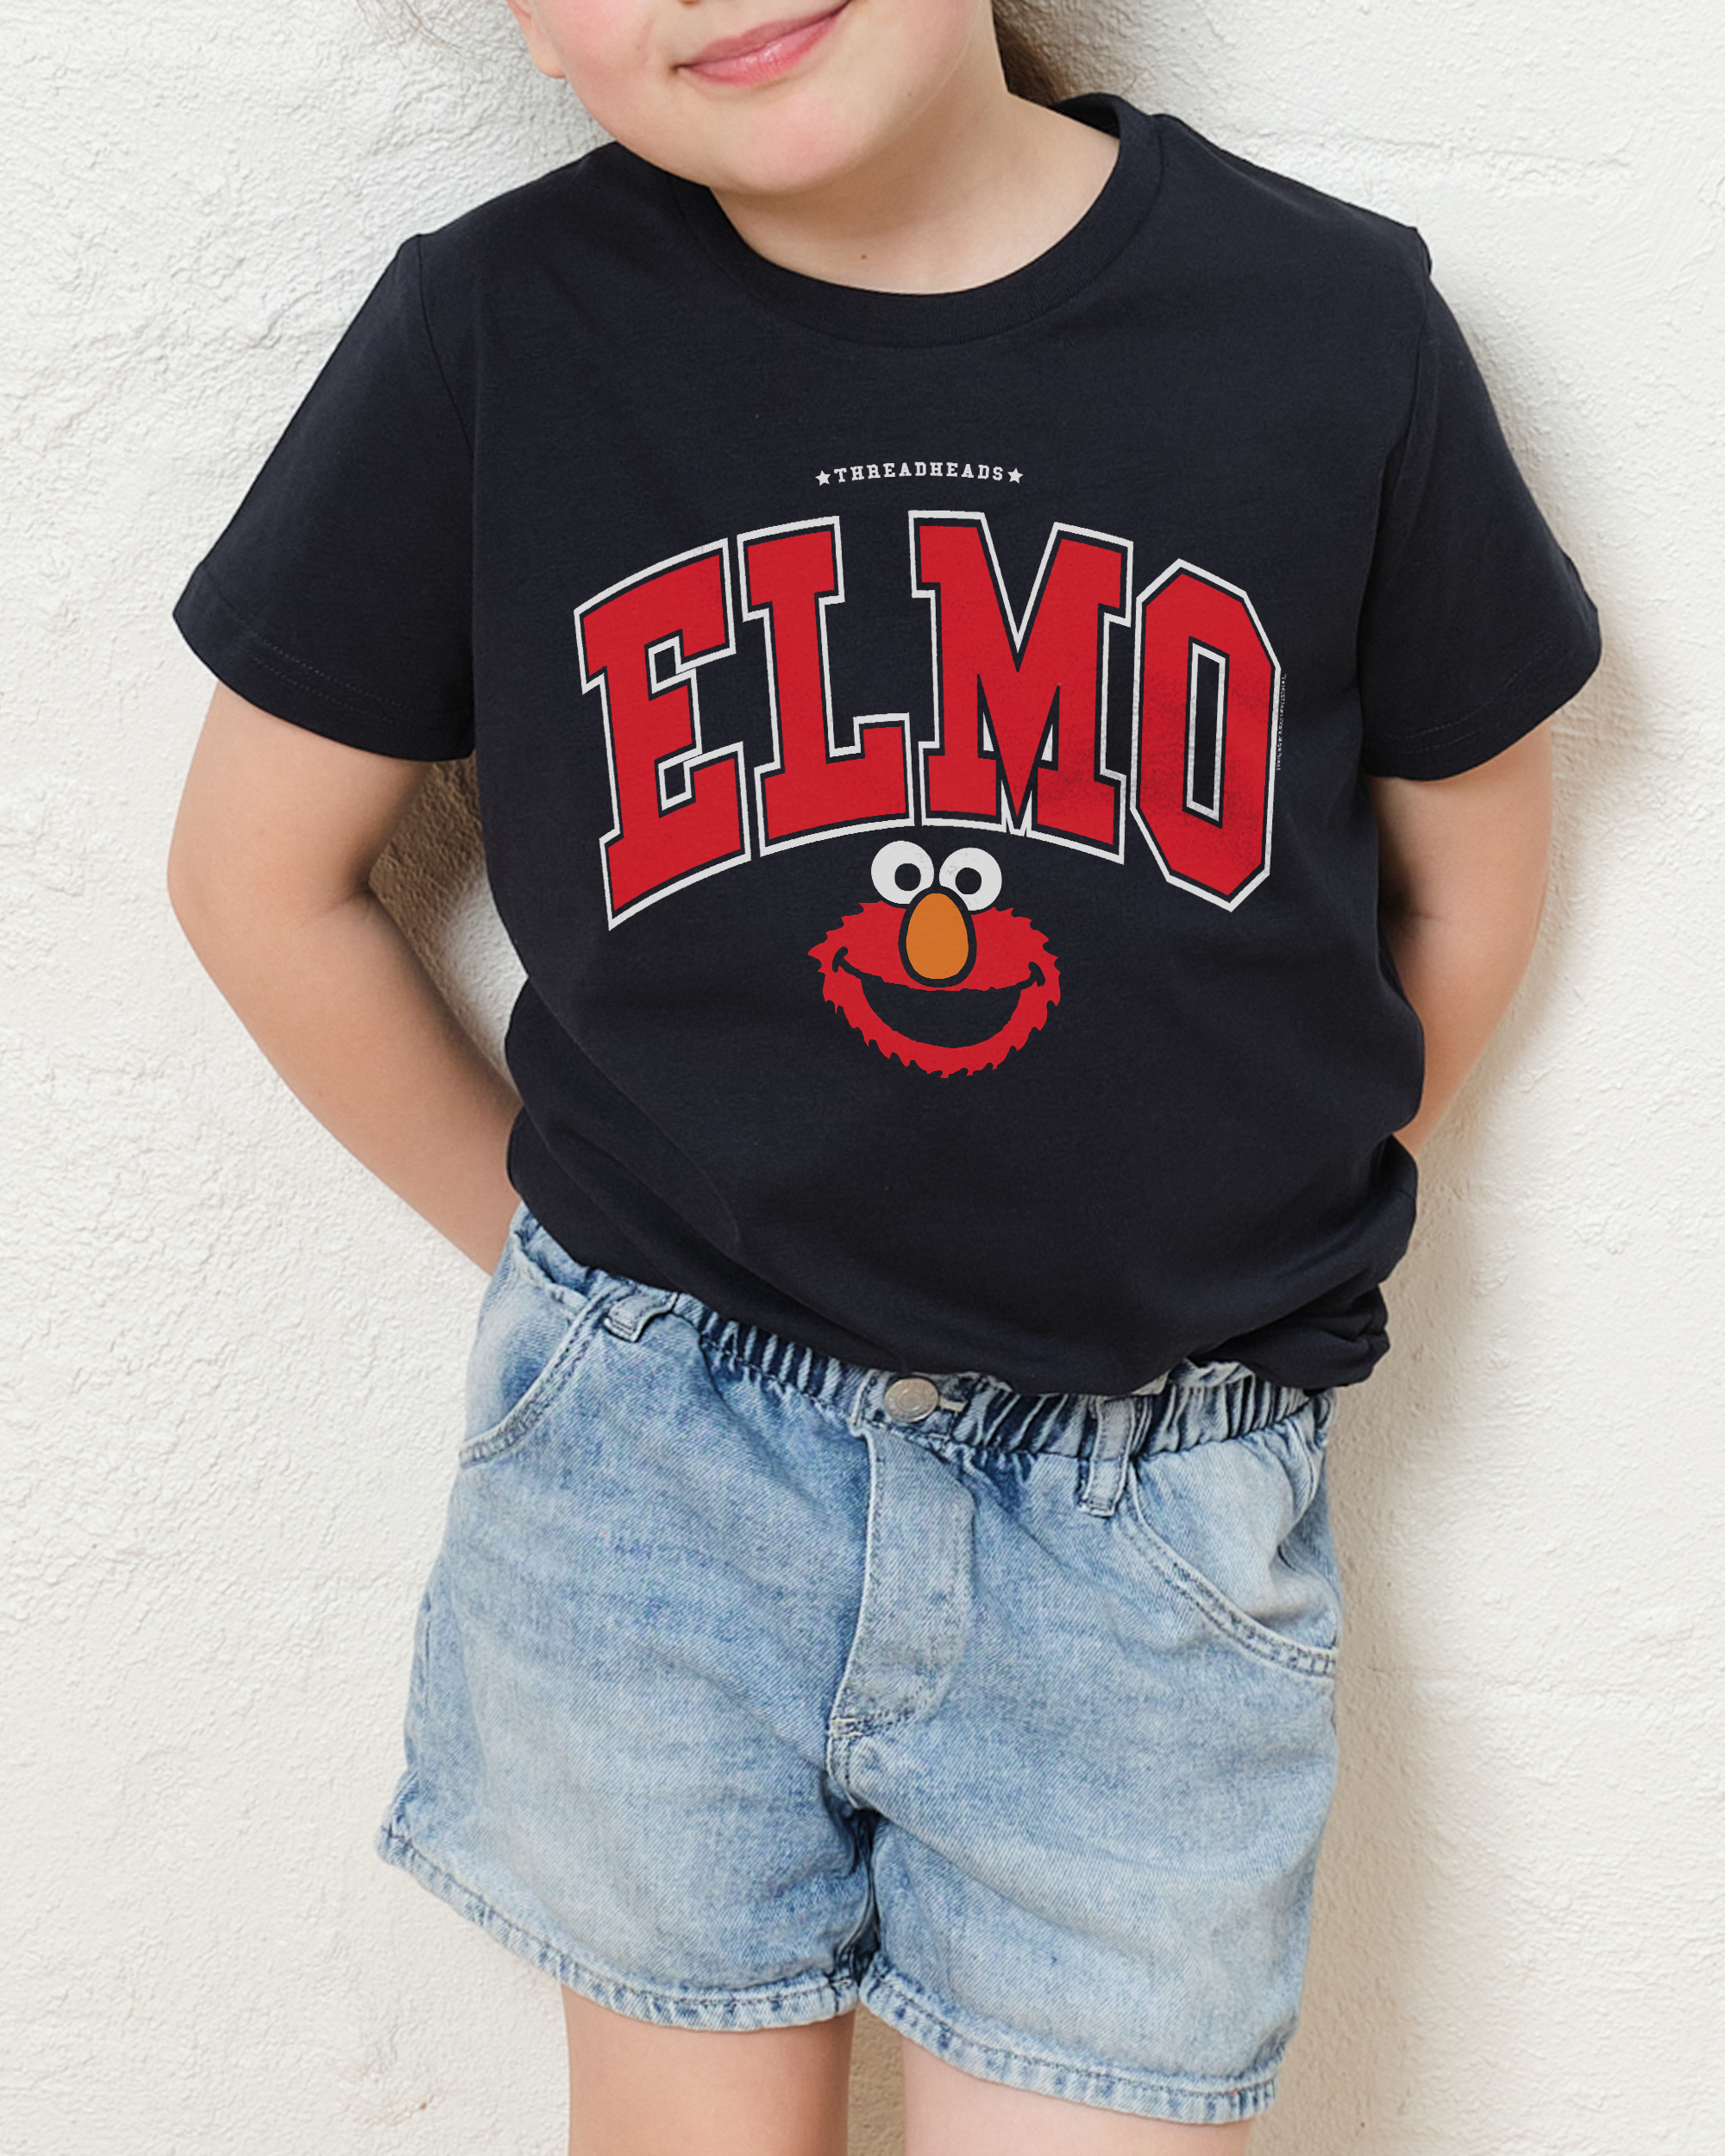 Elmo College Kids T-Shirt